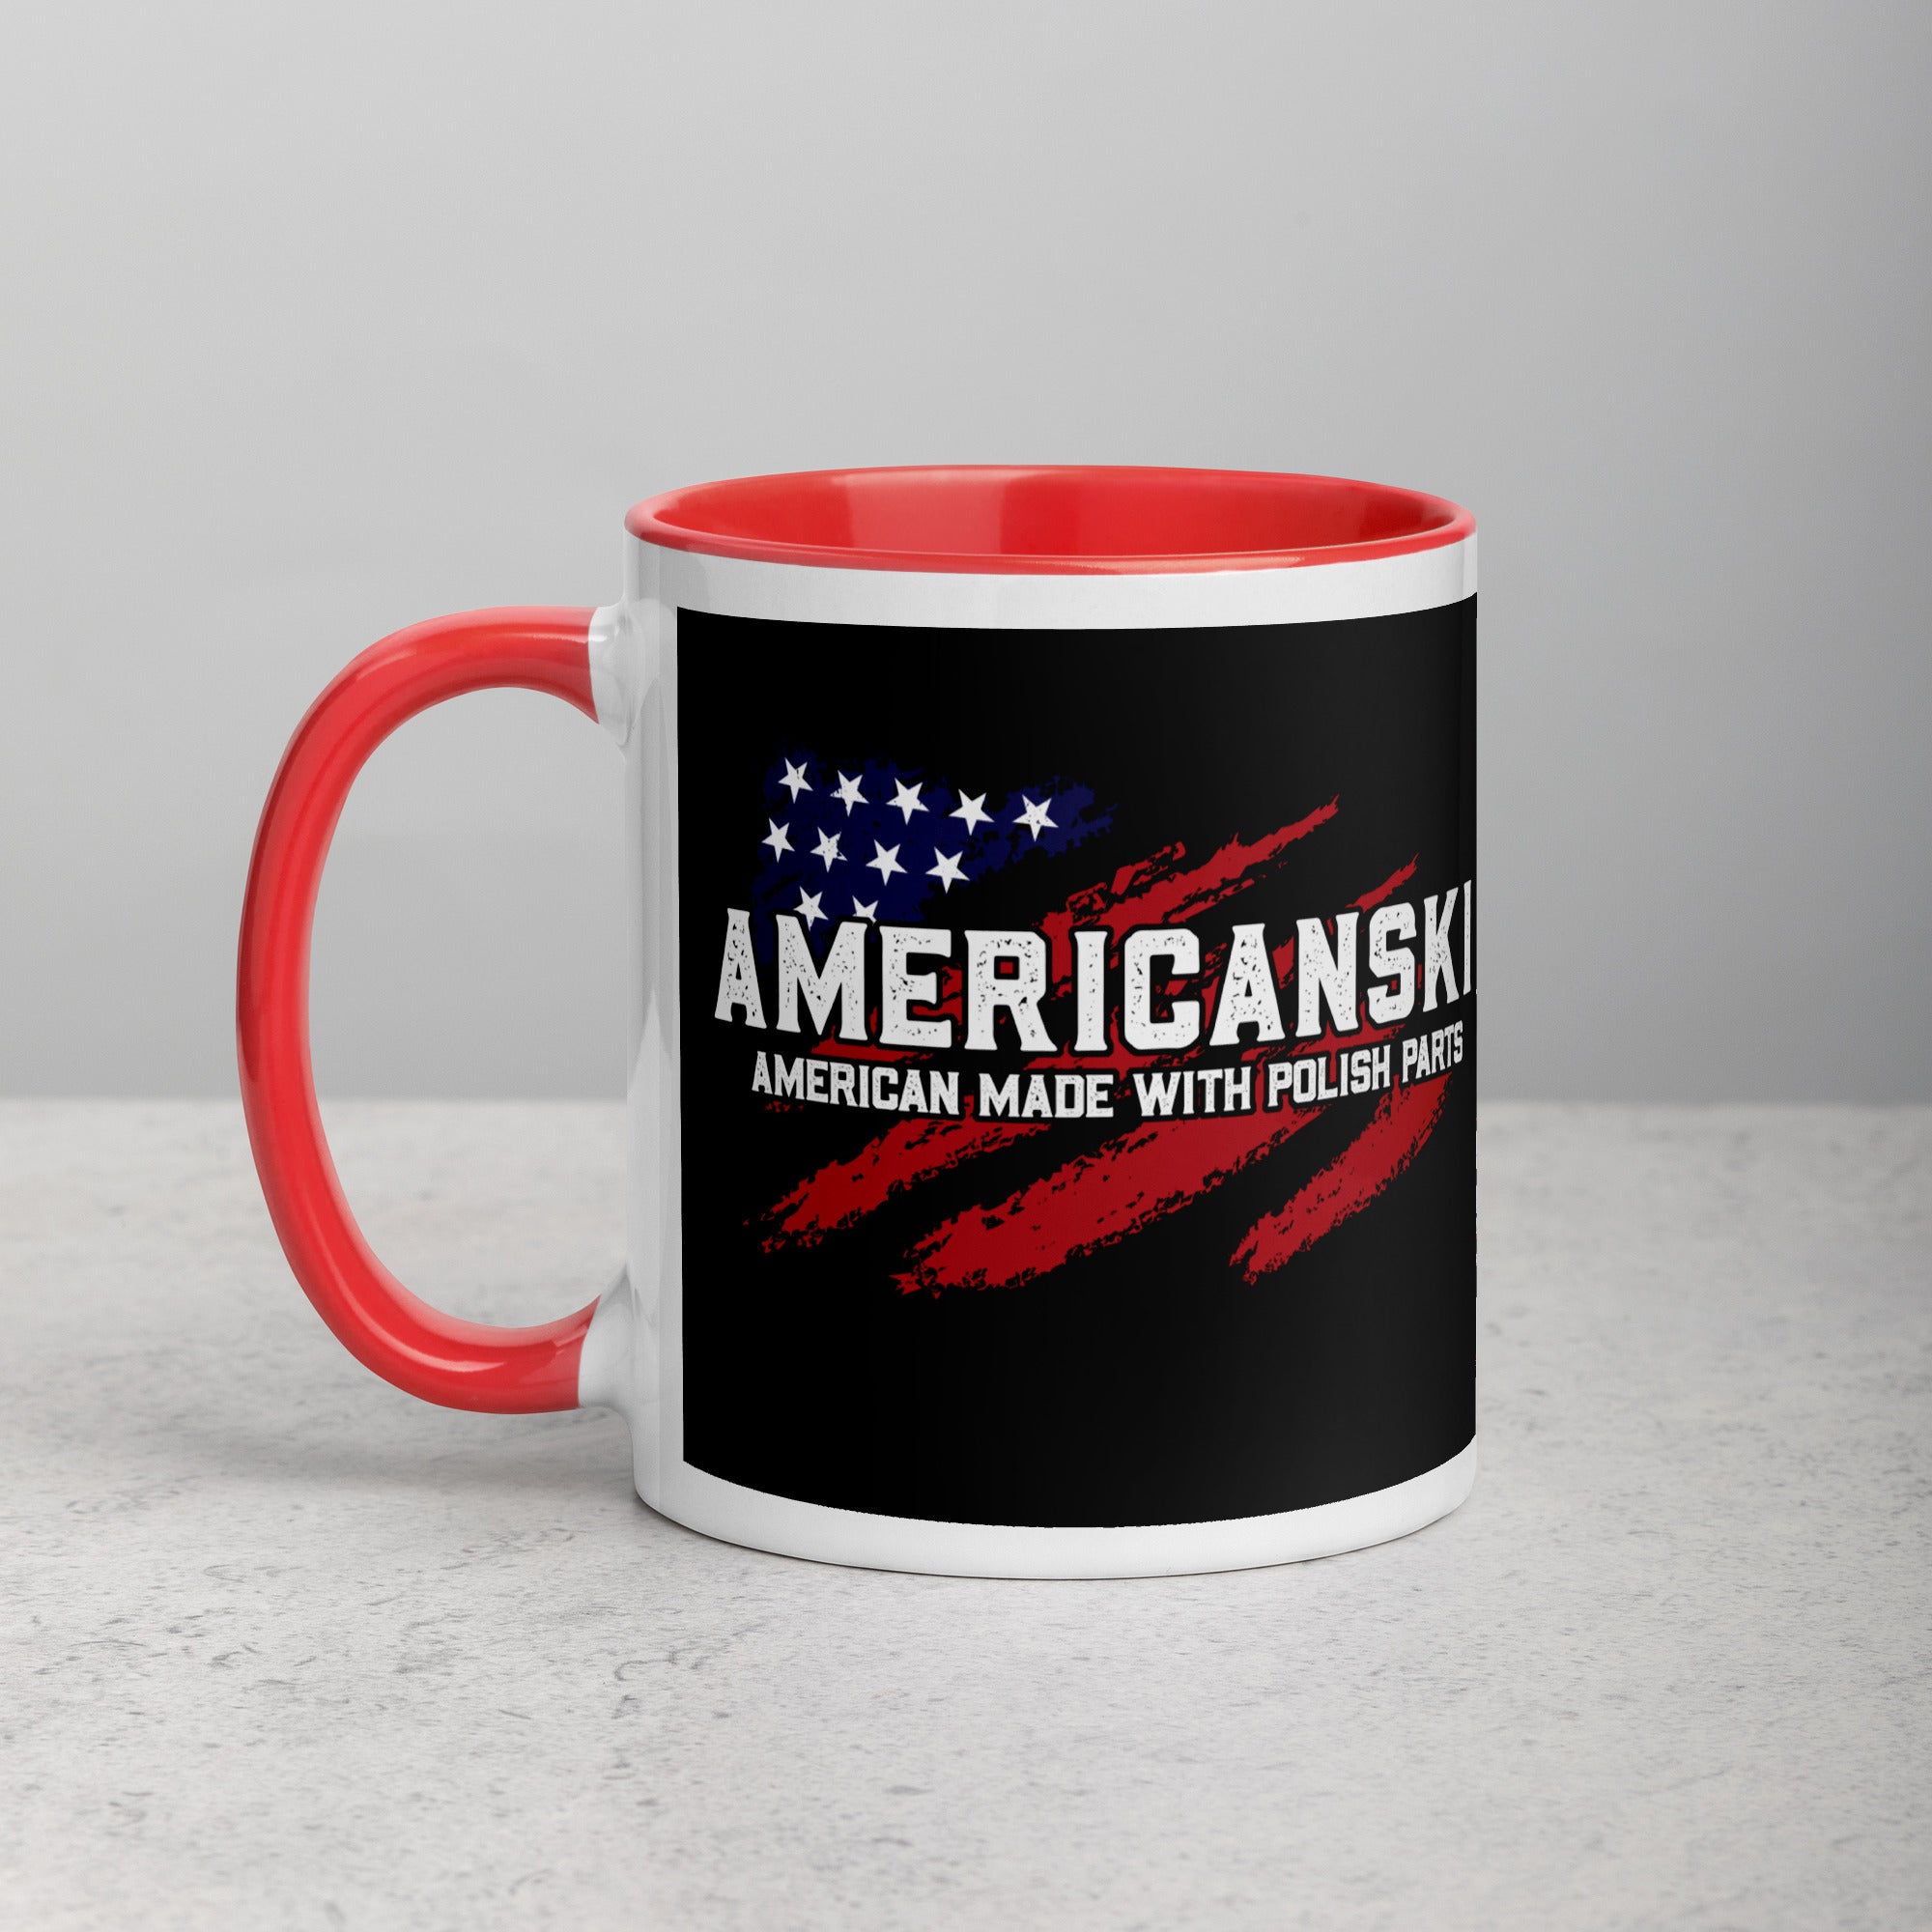 Americanski Coffee Mug with Color Inside  Polish Shirt Store Red 11 oz 